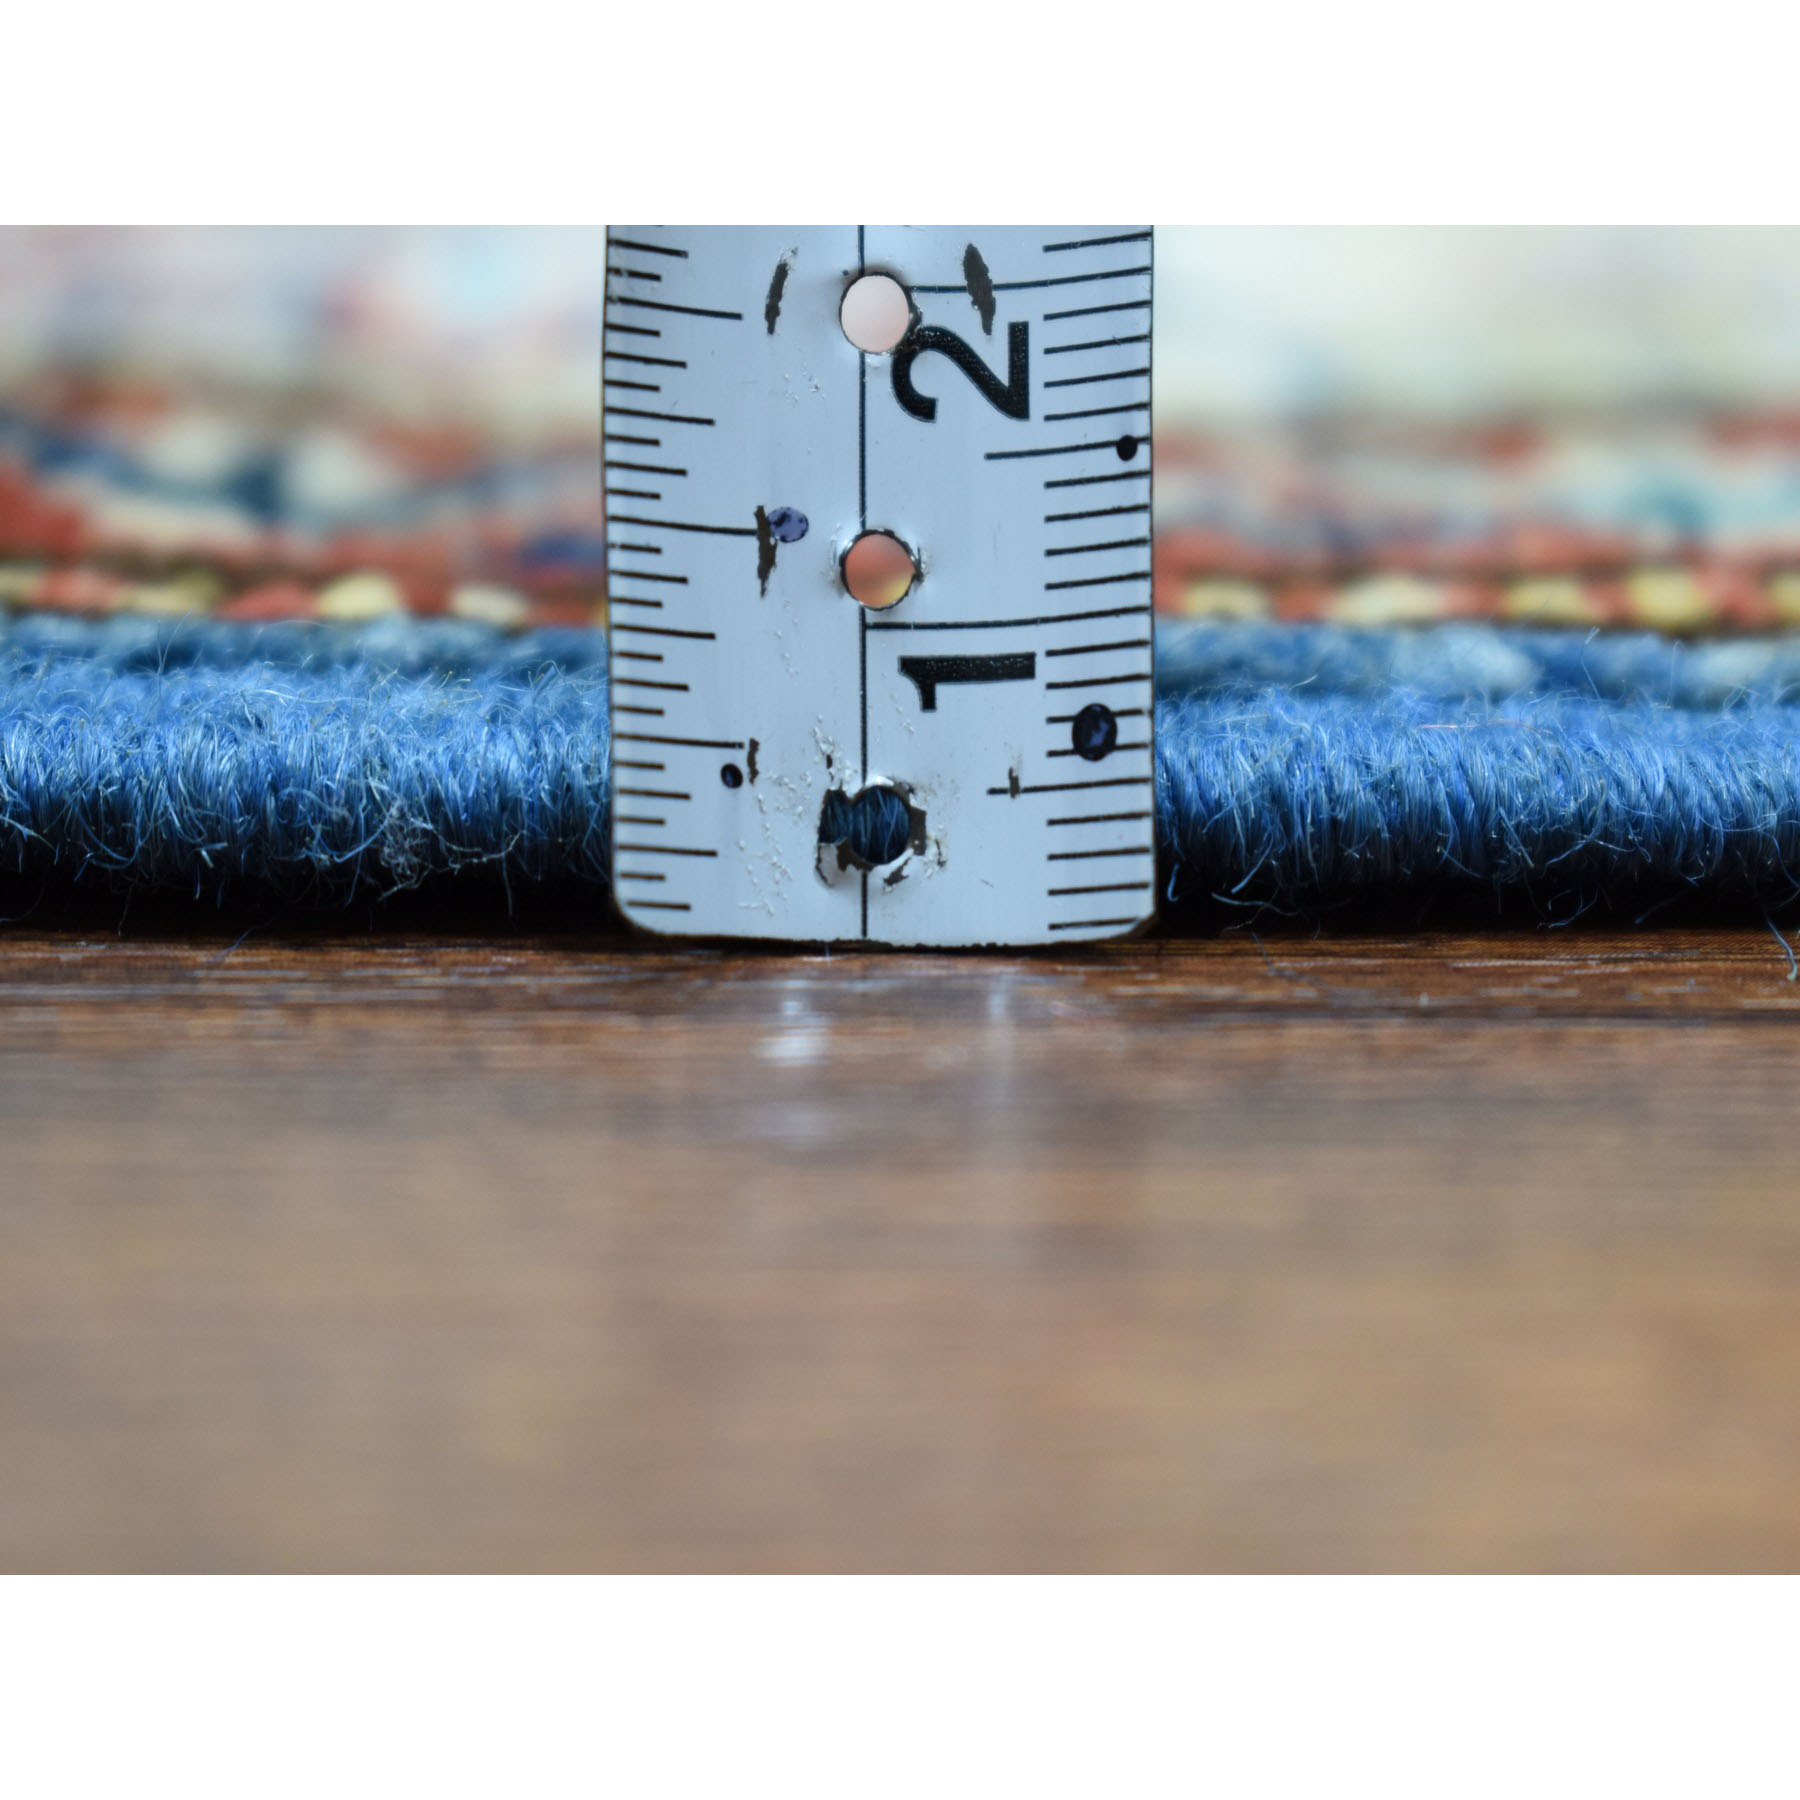 2-9 x4-1  Blue Super Kazak Geometric Design Pure Wool Hand-Knotted Oriental Rug 